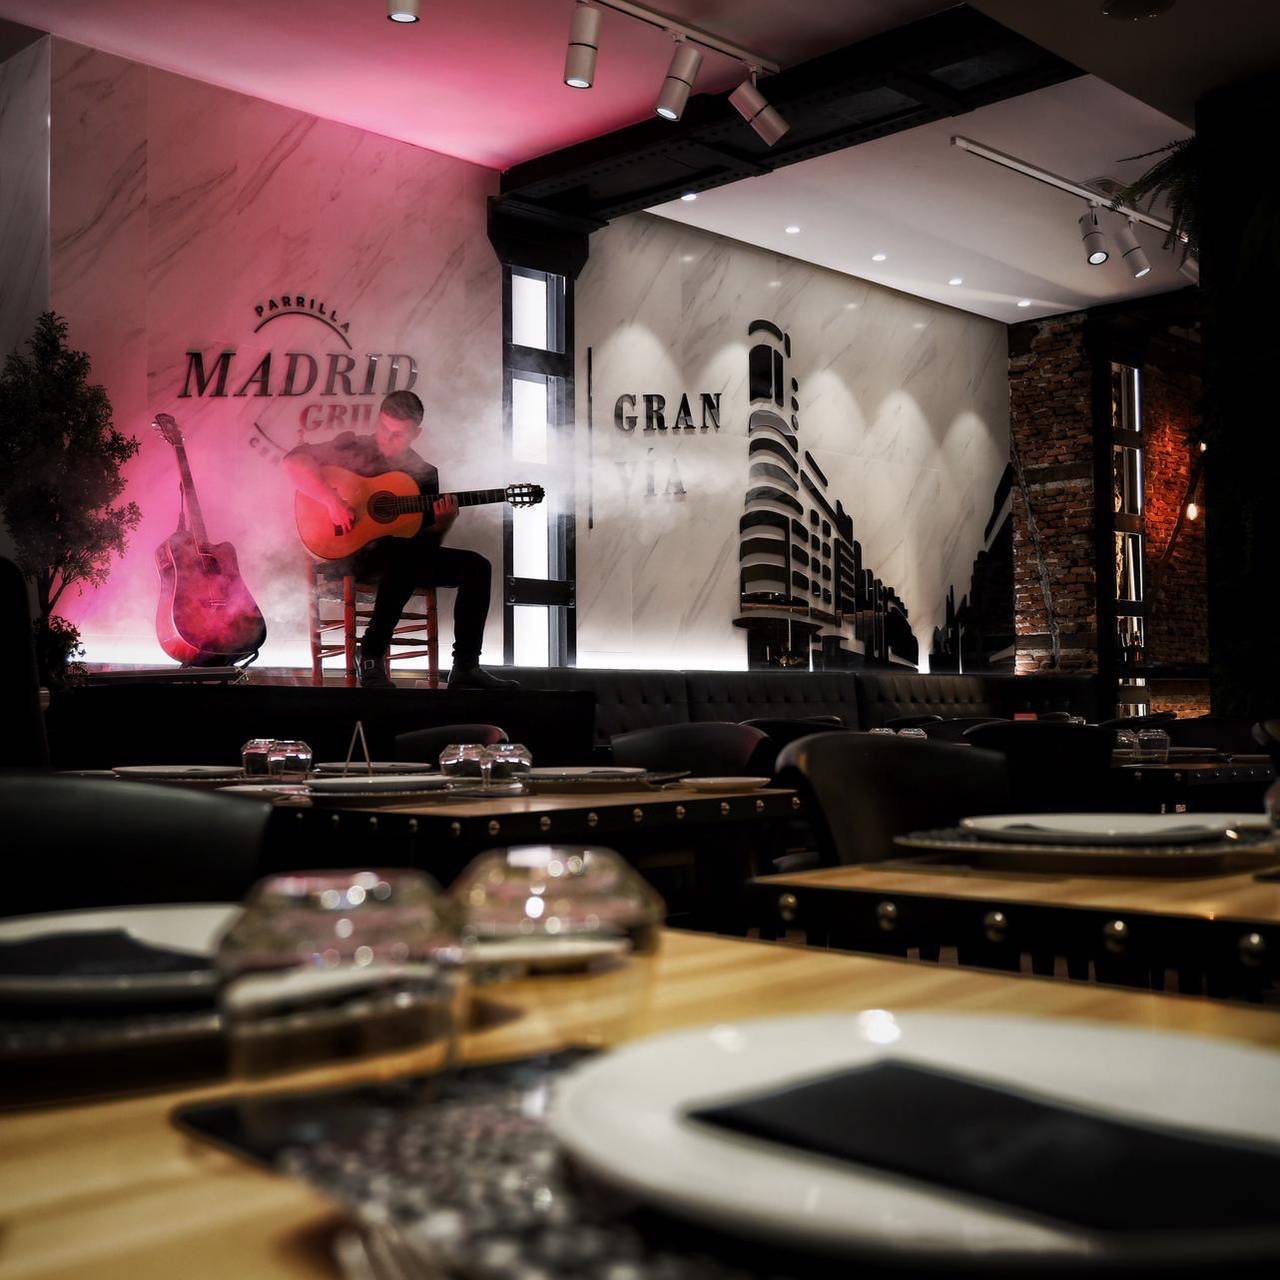 Madrid Grill Restaurant - Madrid, | OpenTable